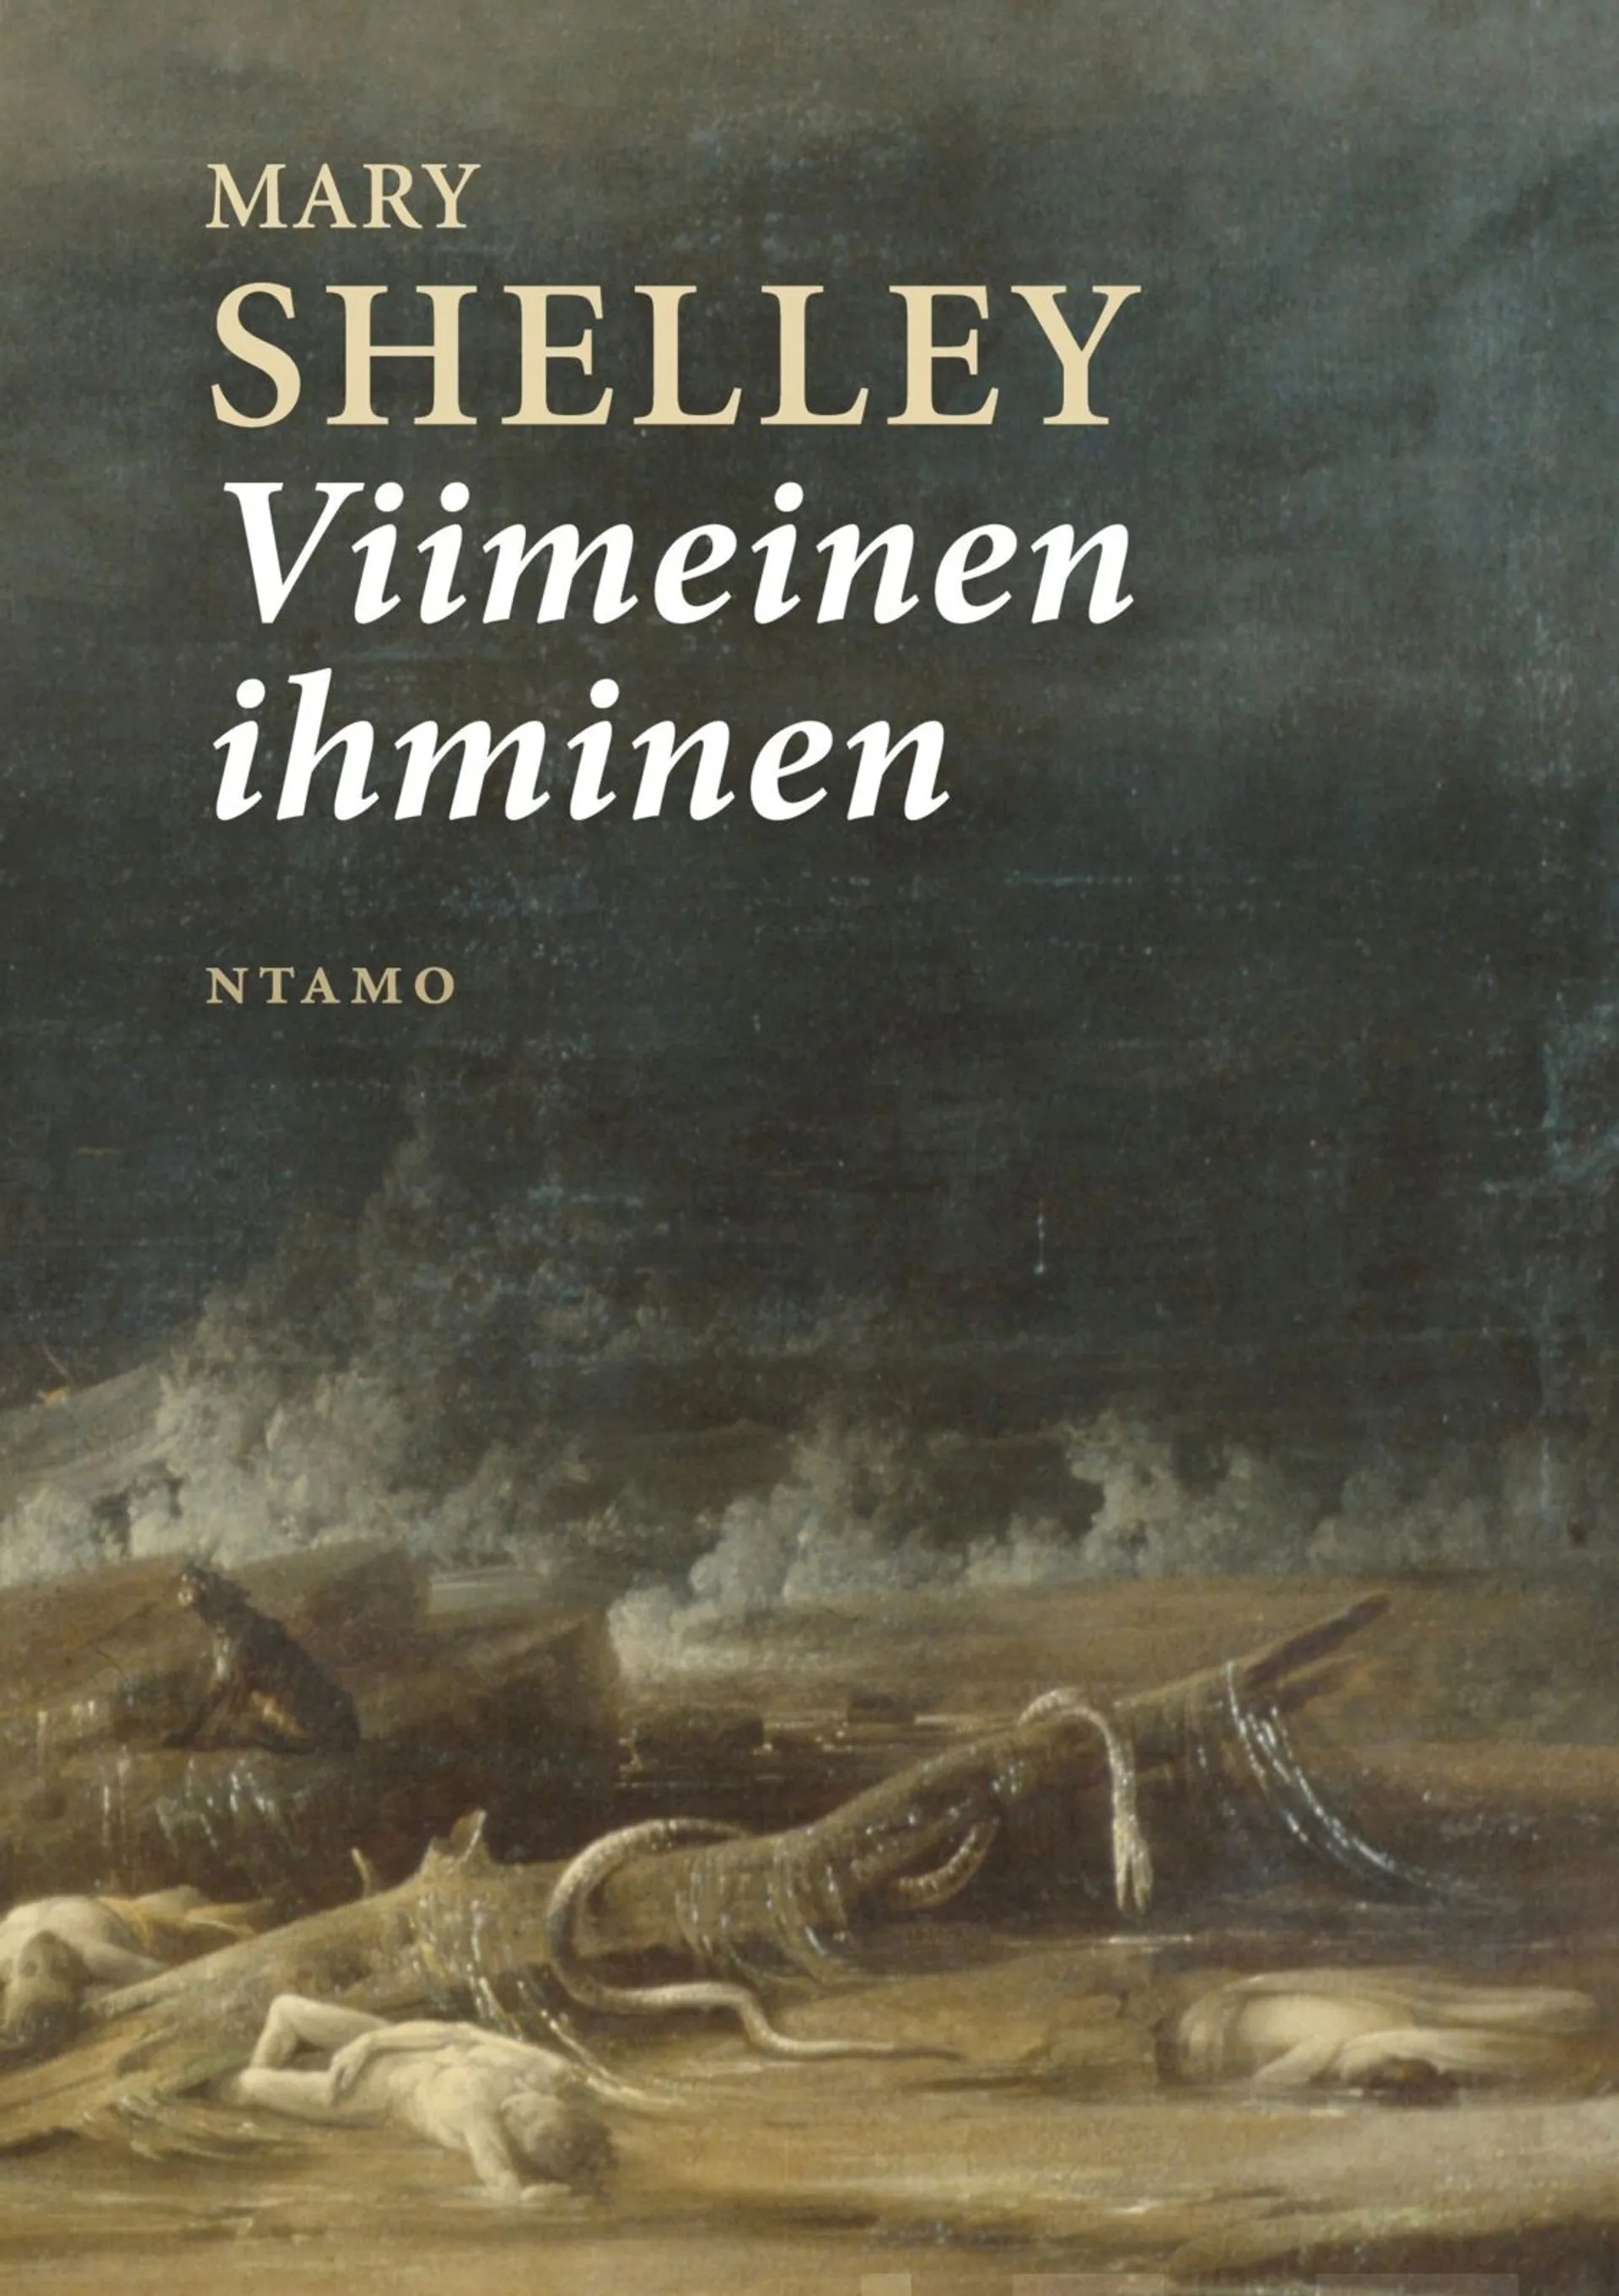 Shelley, Viimeinen ihminen